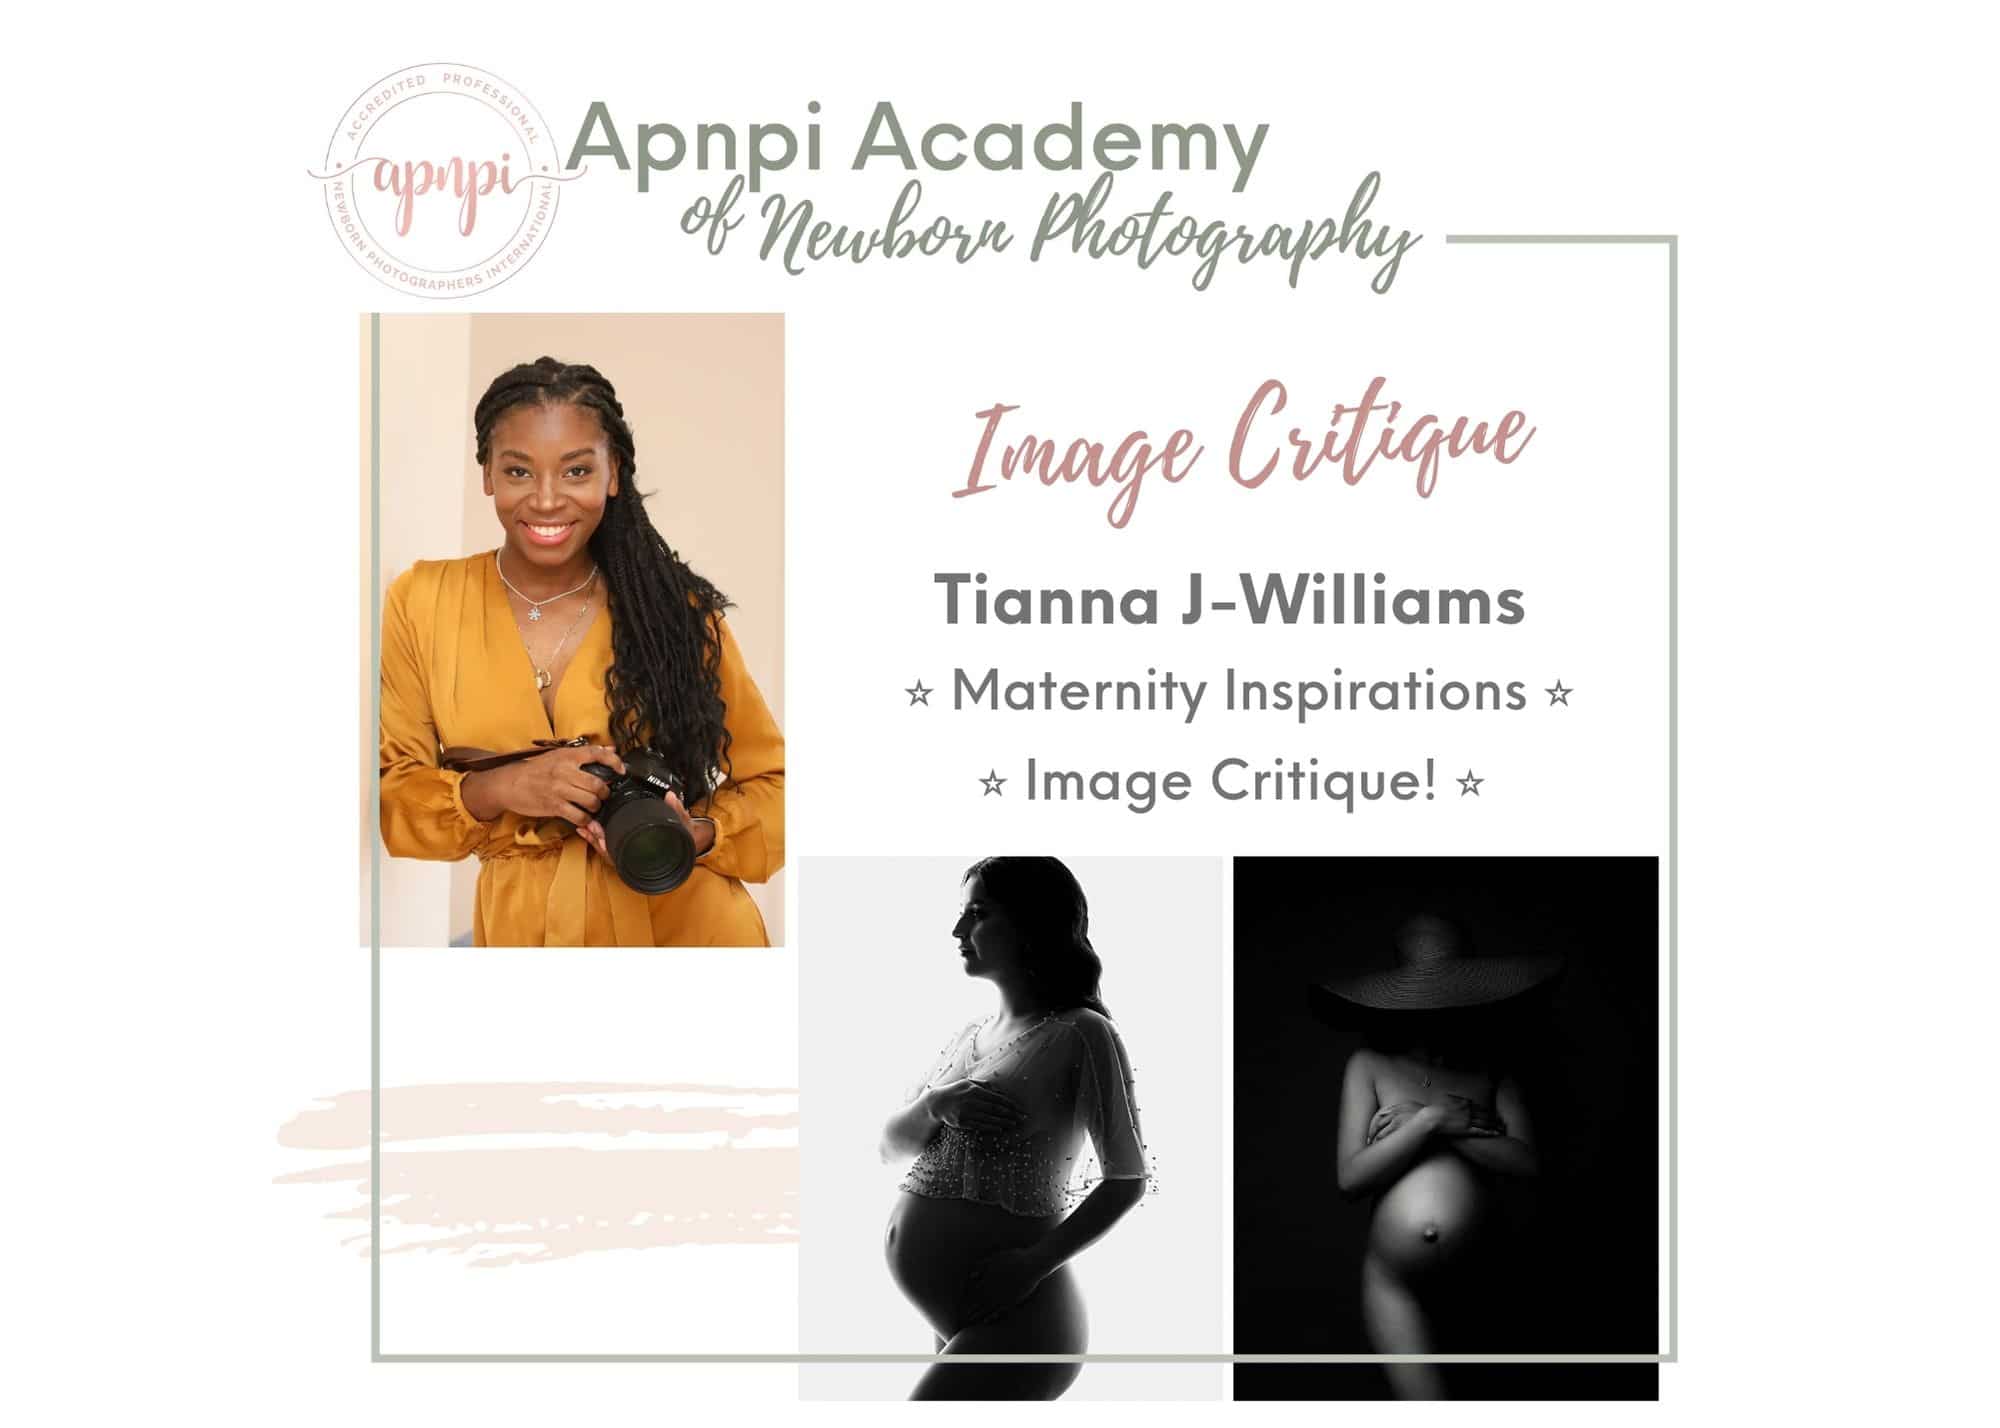 APNPI Academy of Newborn Photography Masterclass - Maternity Inspirations with Tianna J-Williams